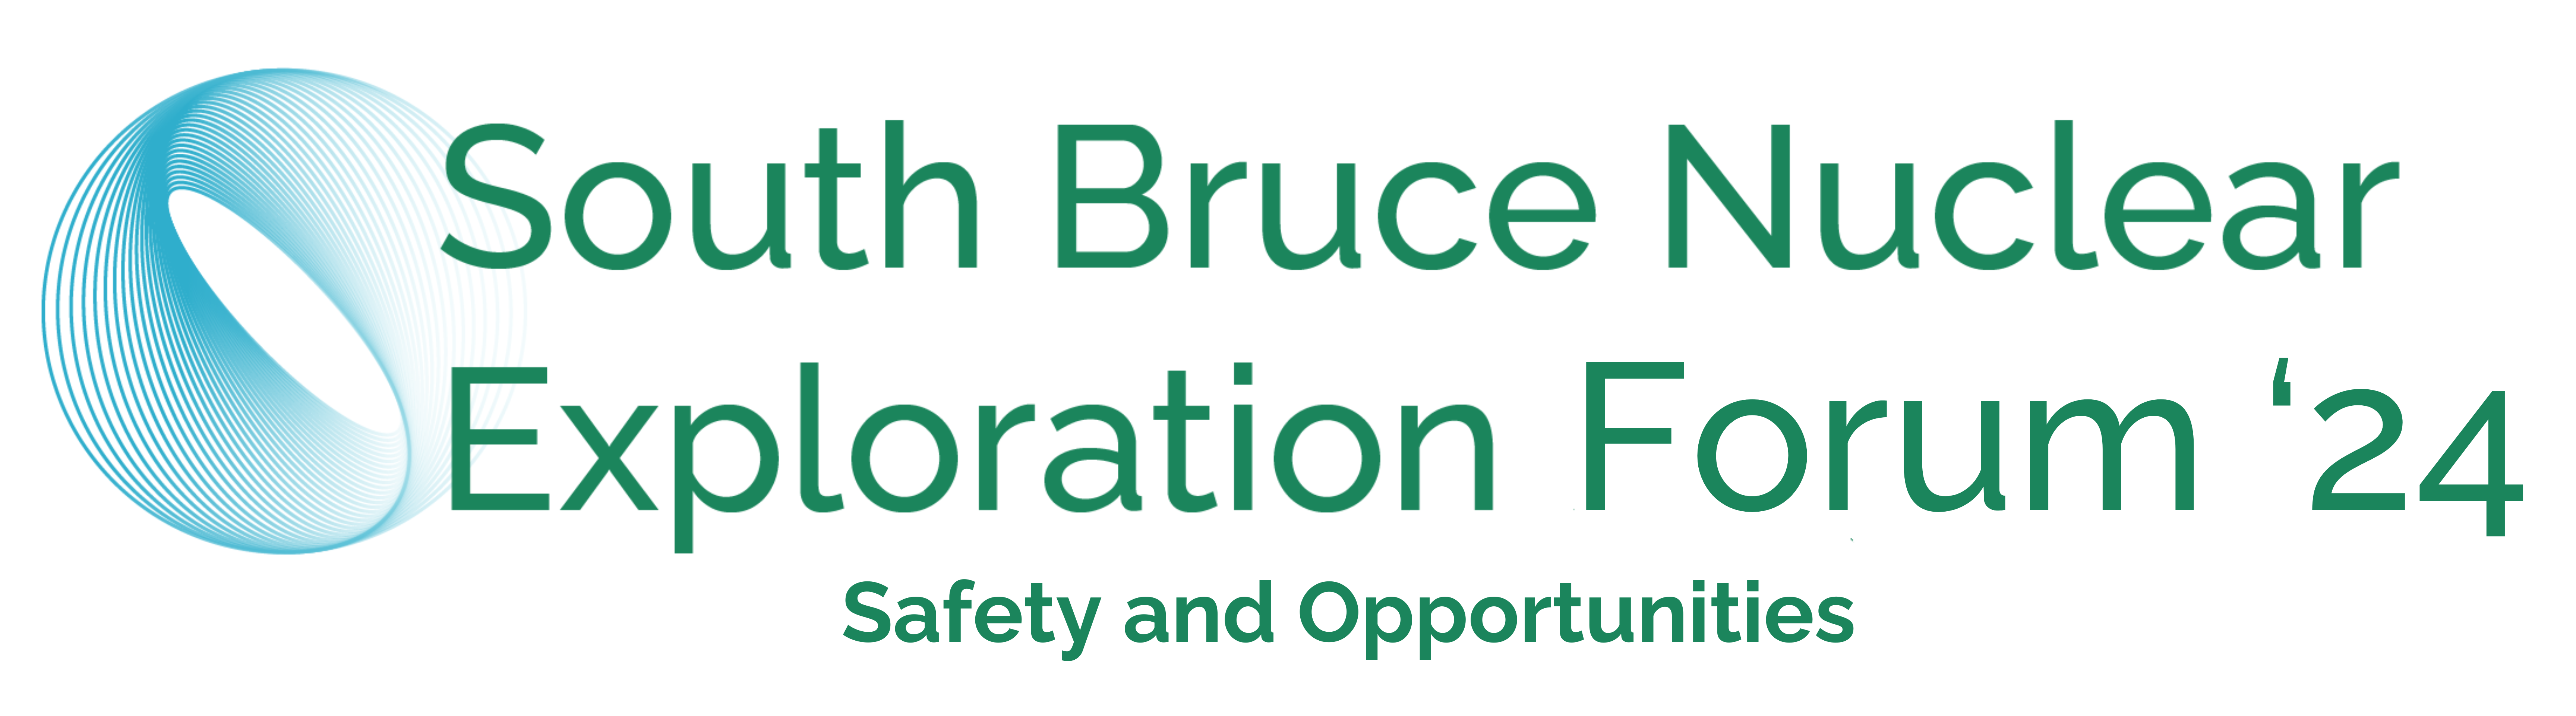 South Bruce Nuclear Exploration Forum 2024 Logo